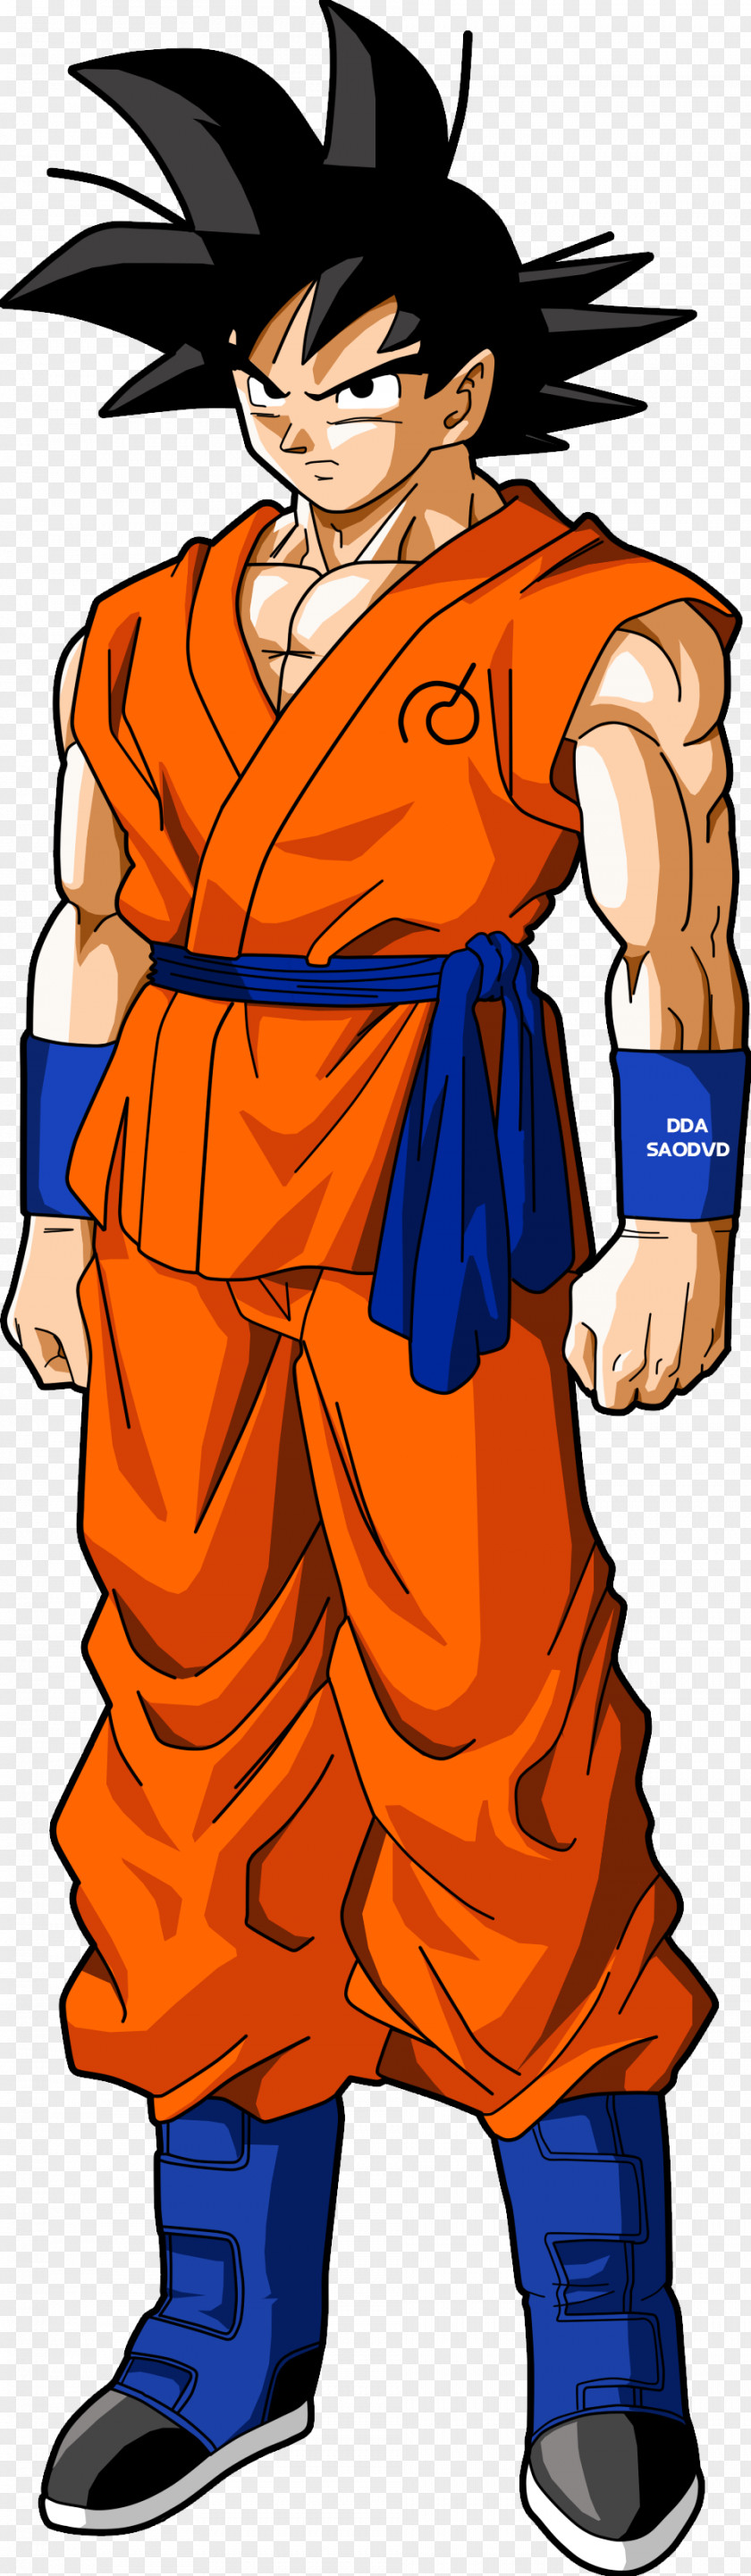 Goku Trunks Gohan Vegeta Piccolo PNG